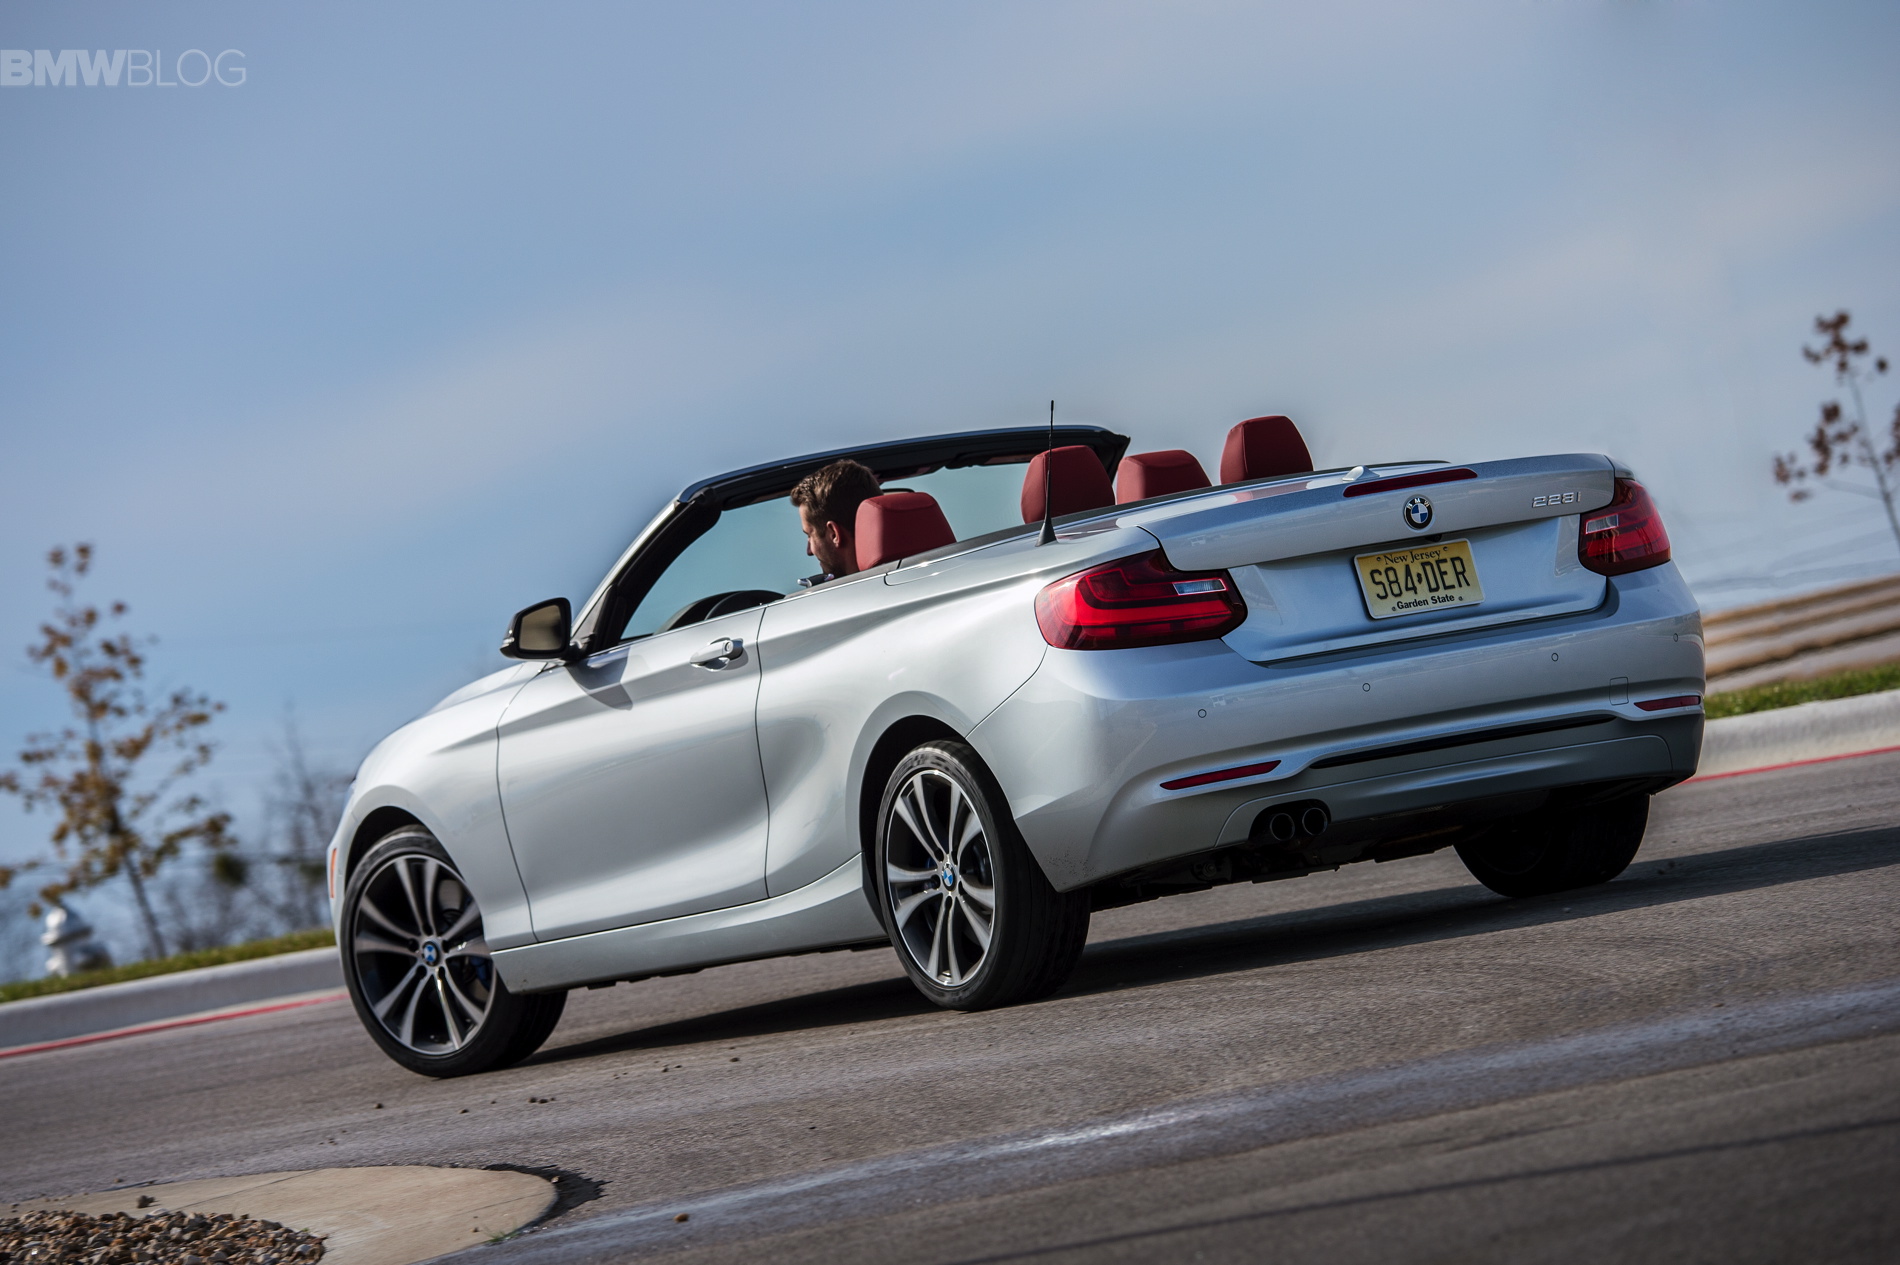 2015 BMW 2 Series Convertible goes to Austin, Texas